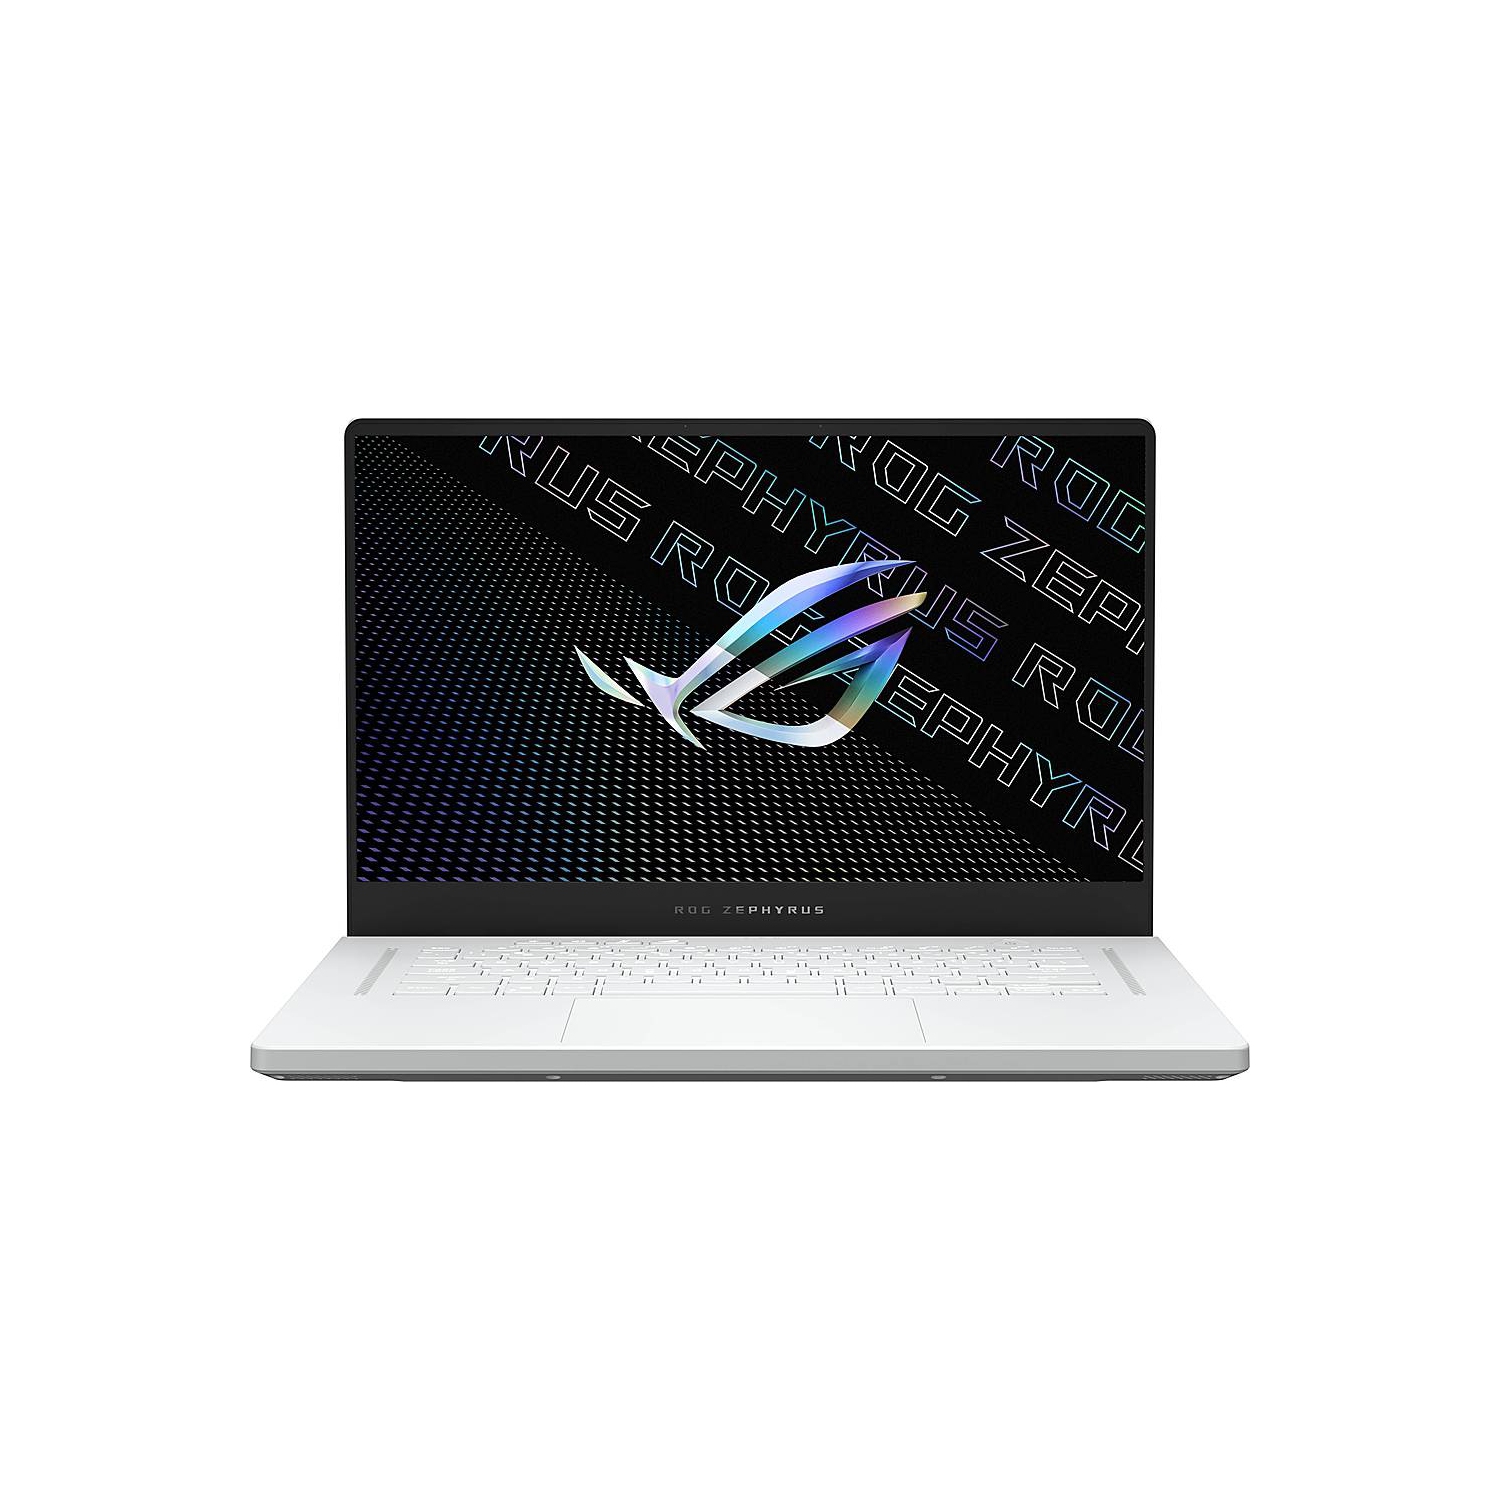 Custom ASUS ROG Zephyrus G15 Laptop (AMD Ryzen 9 5900HS, 32GB RAM, 2x512GB PCIe SSD (1TB), NVIDIA RTX 3080 Max-Q, Win 10 Pro)